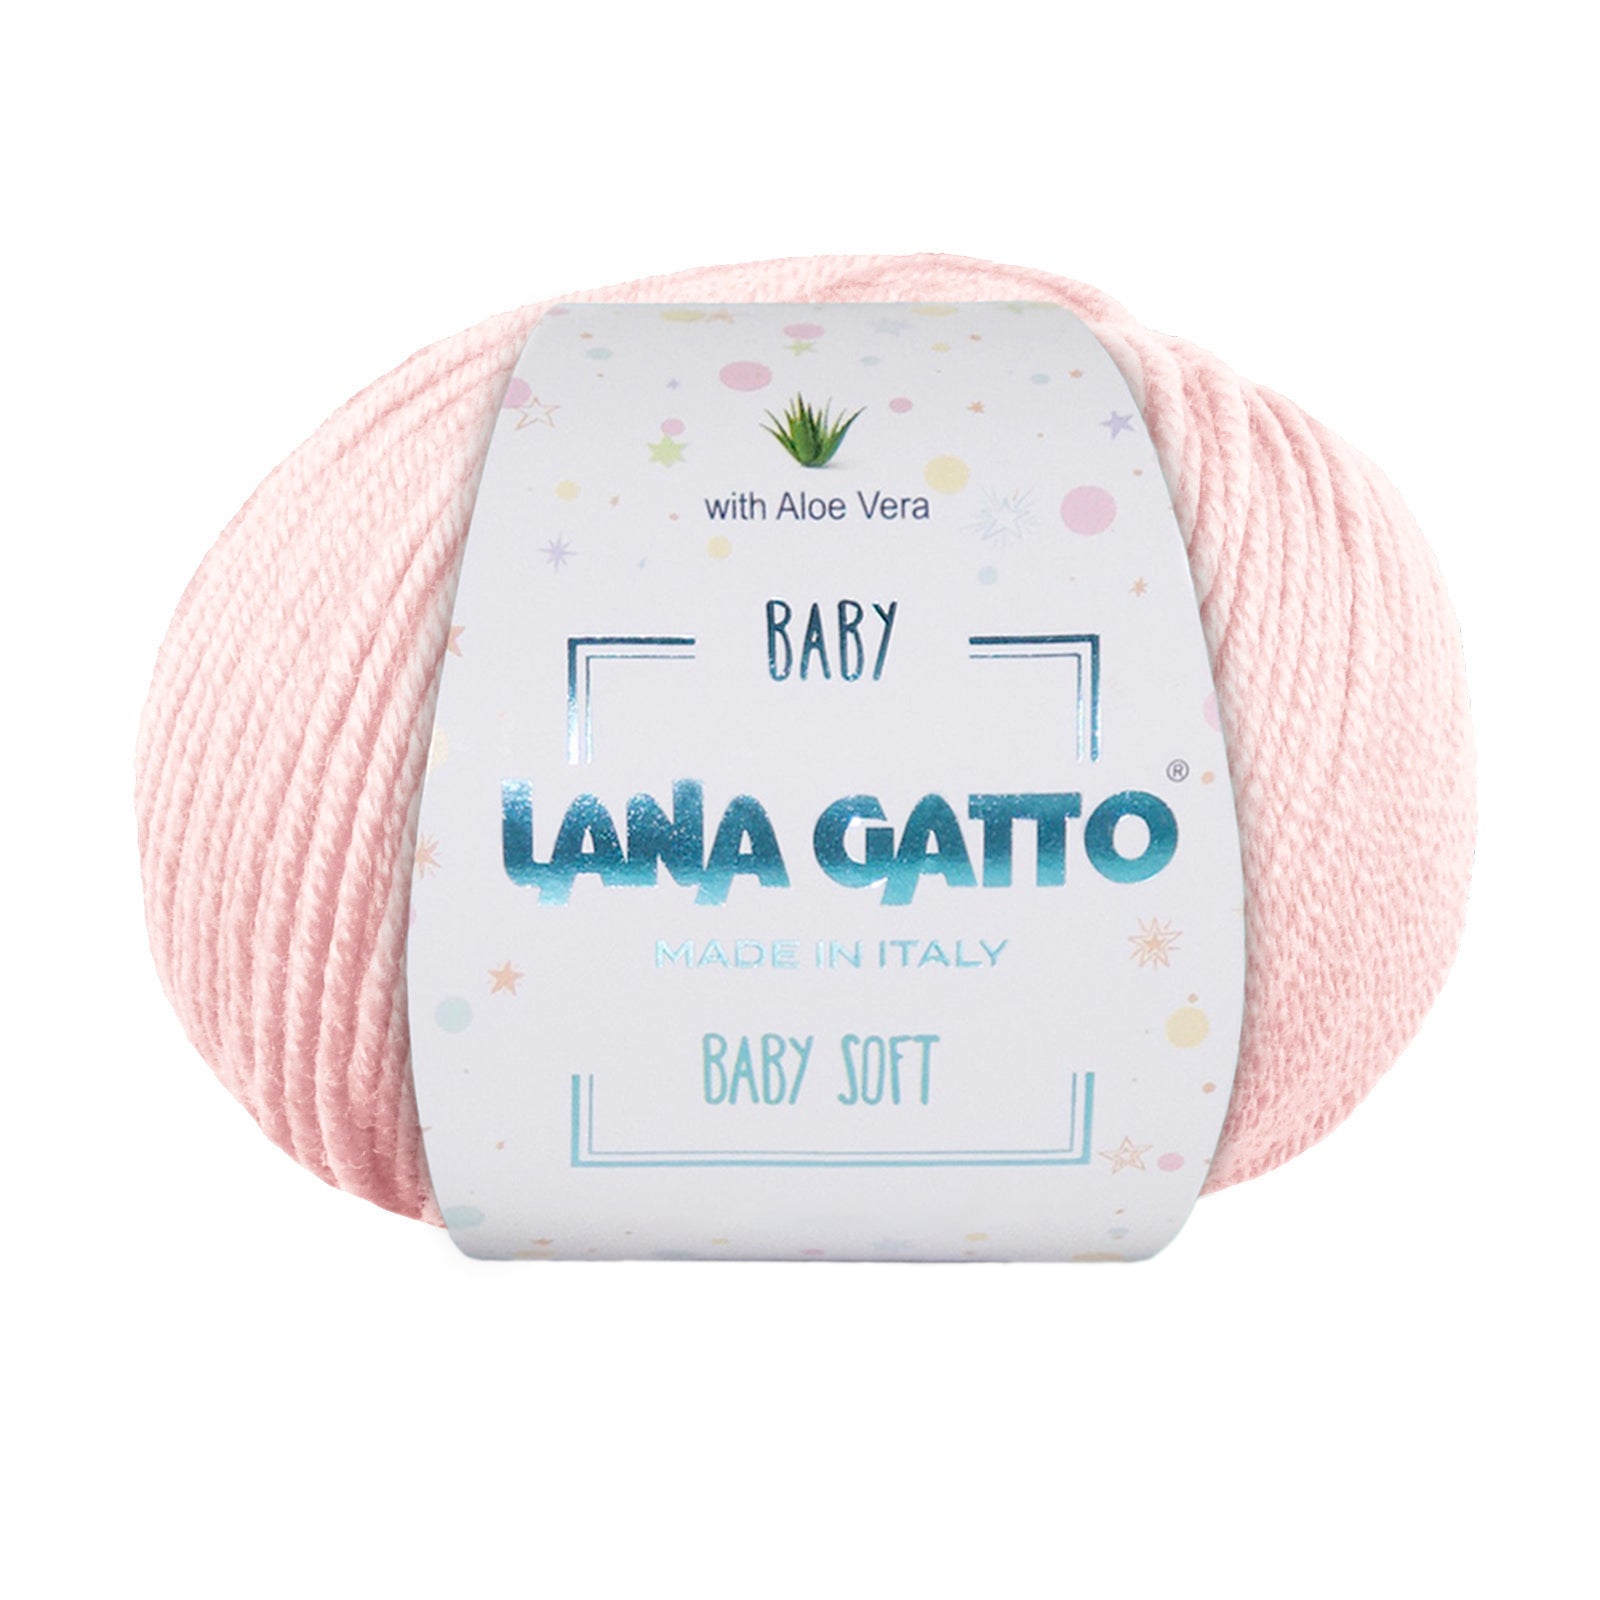 100% Pure Virgin Merino Wool Extrafine, Lana Gatto Baby Soft Line With